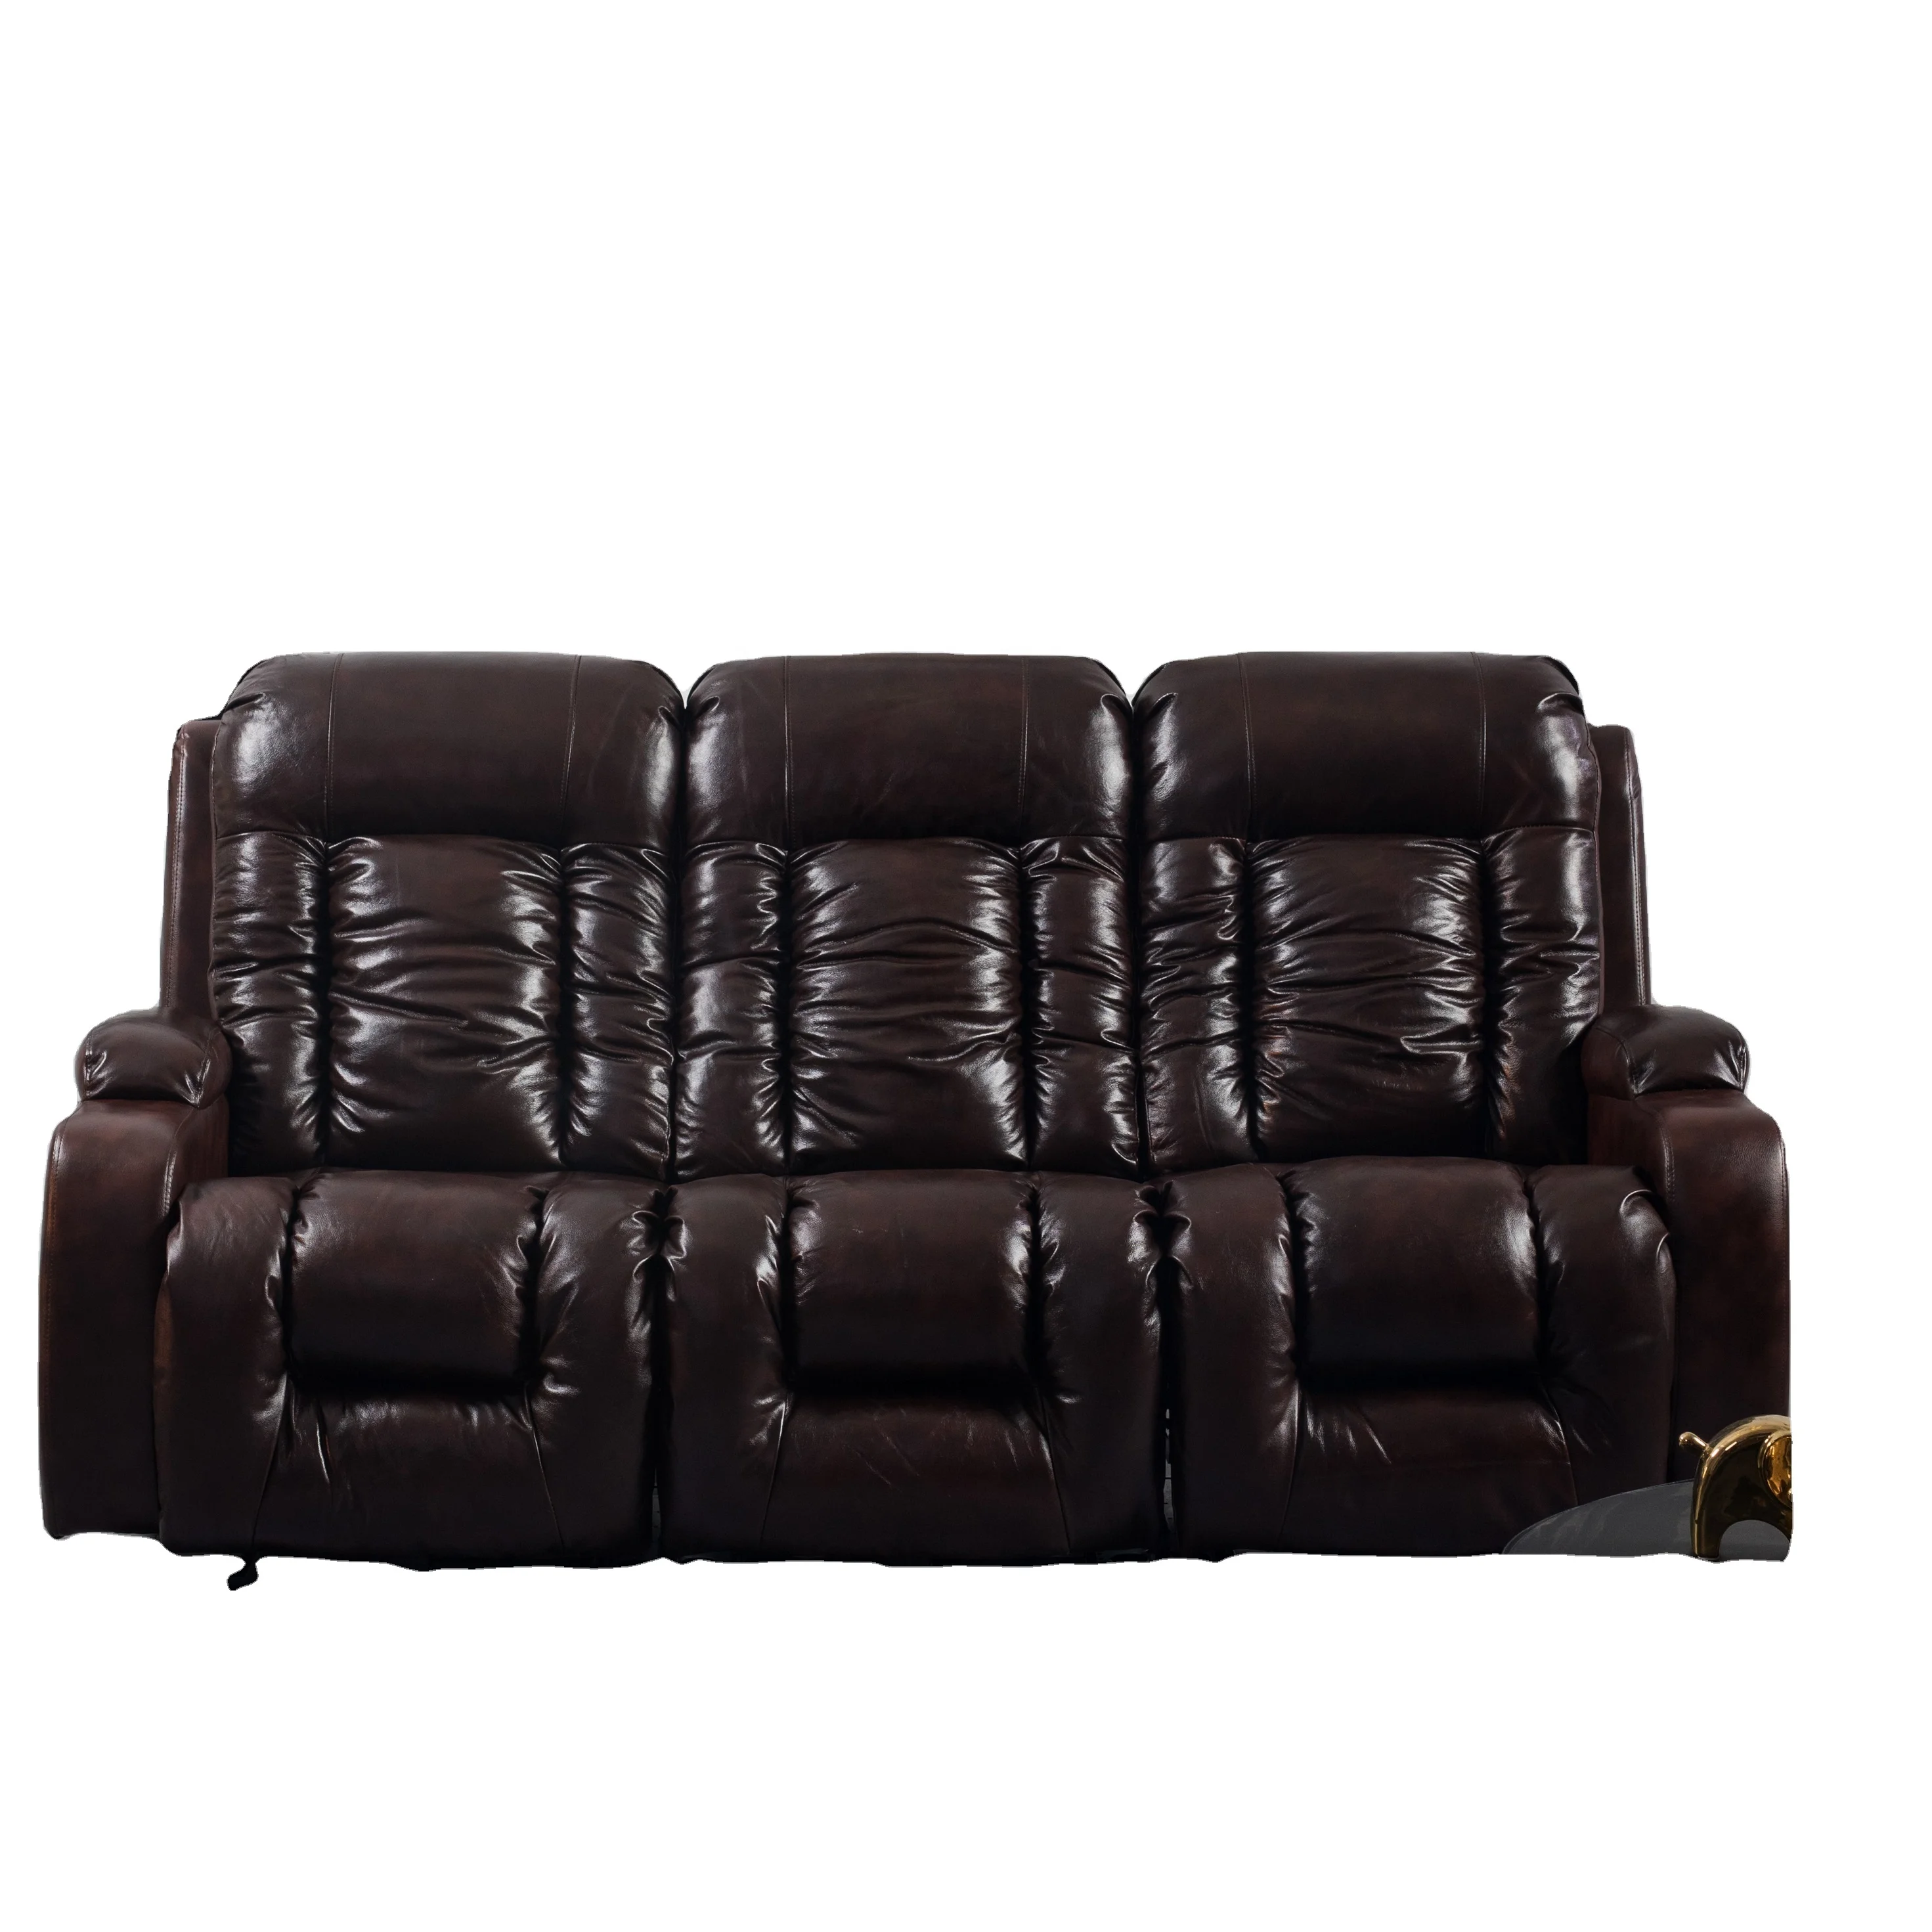 

JKY Furniture Modern Luxury Leather Swivel Recliner Sofa Set For ReadingSleepingWatching TV